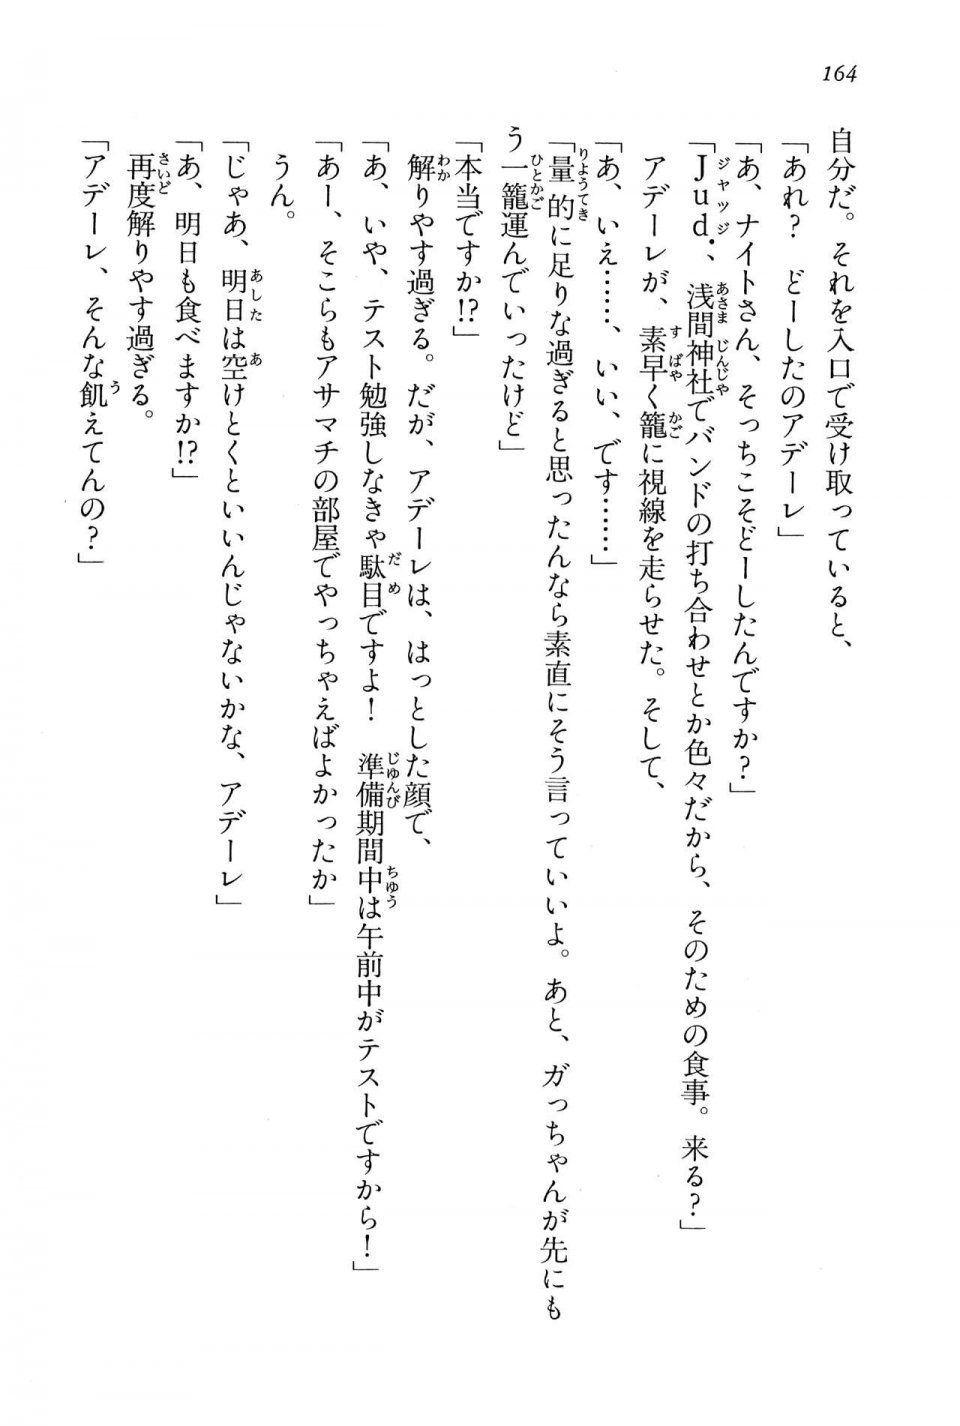 Kyoukai Senjou no Horizon BD Special Mininovel Vol 6(3B) - Photo #168